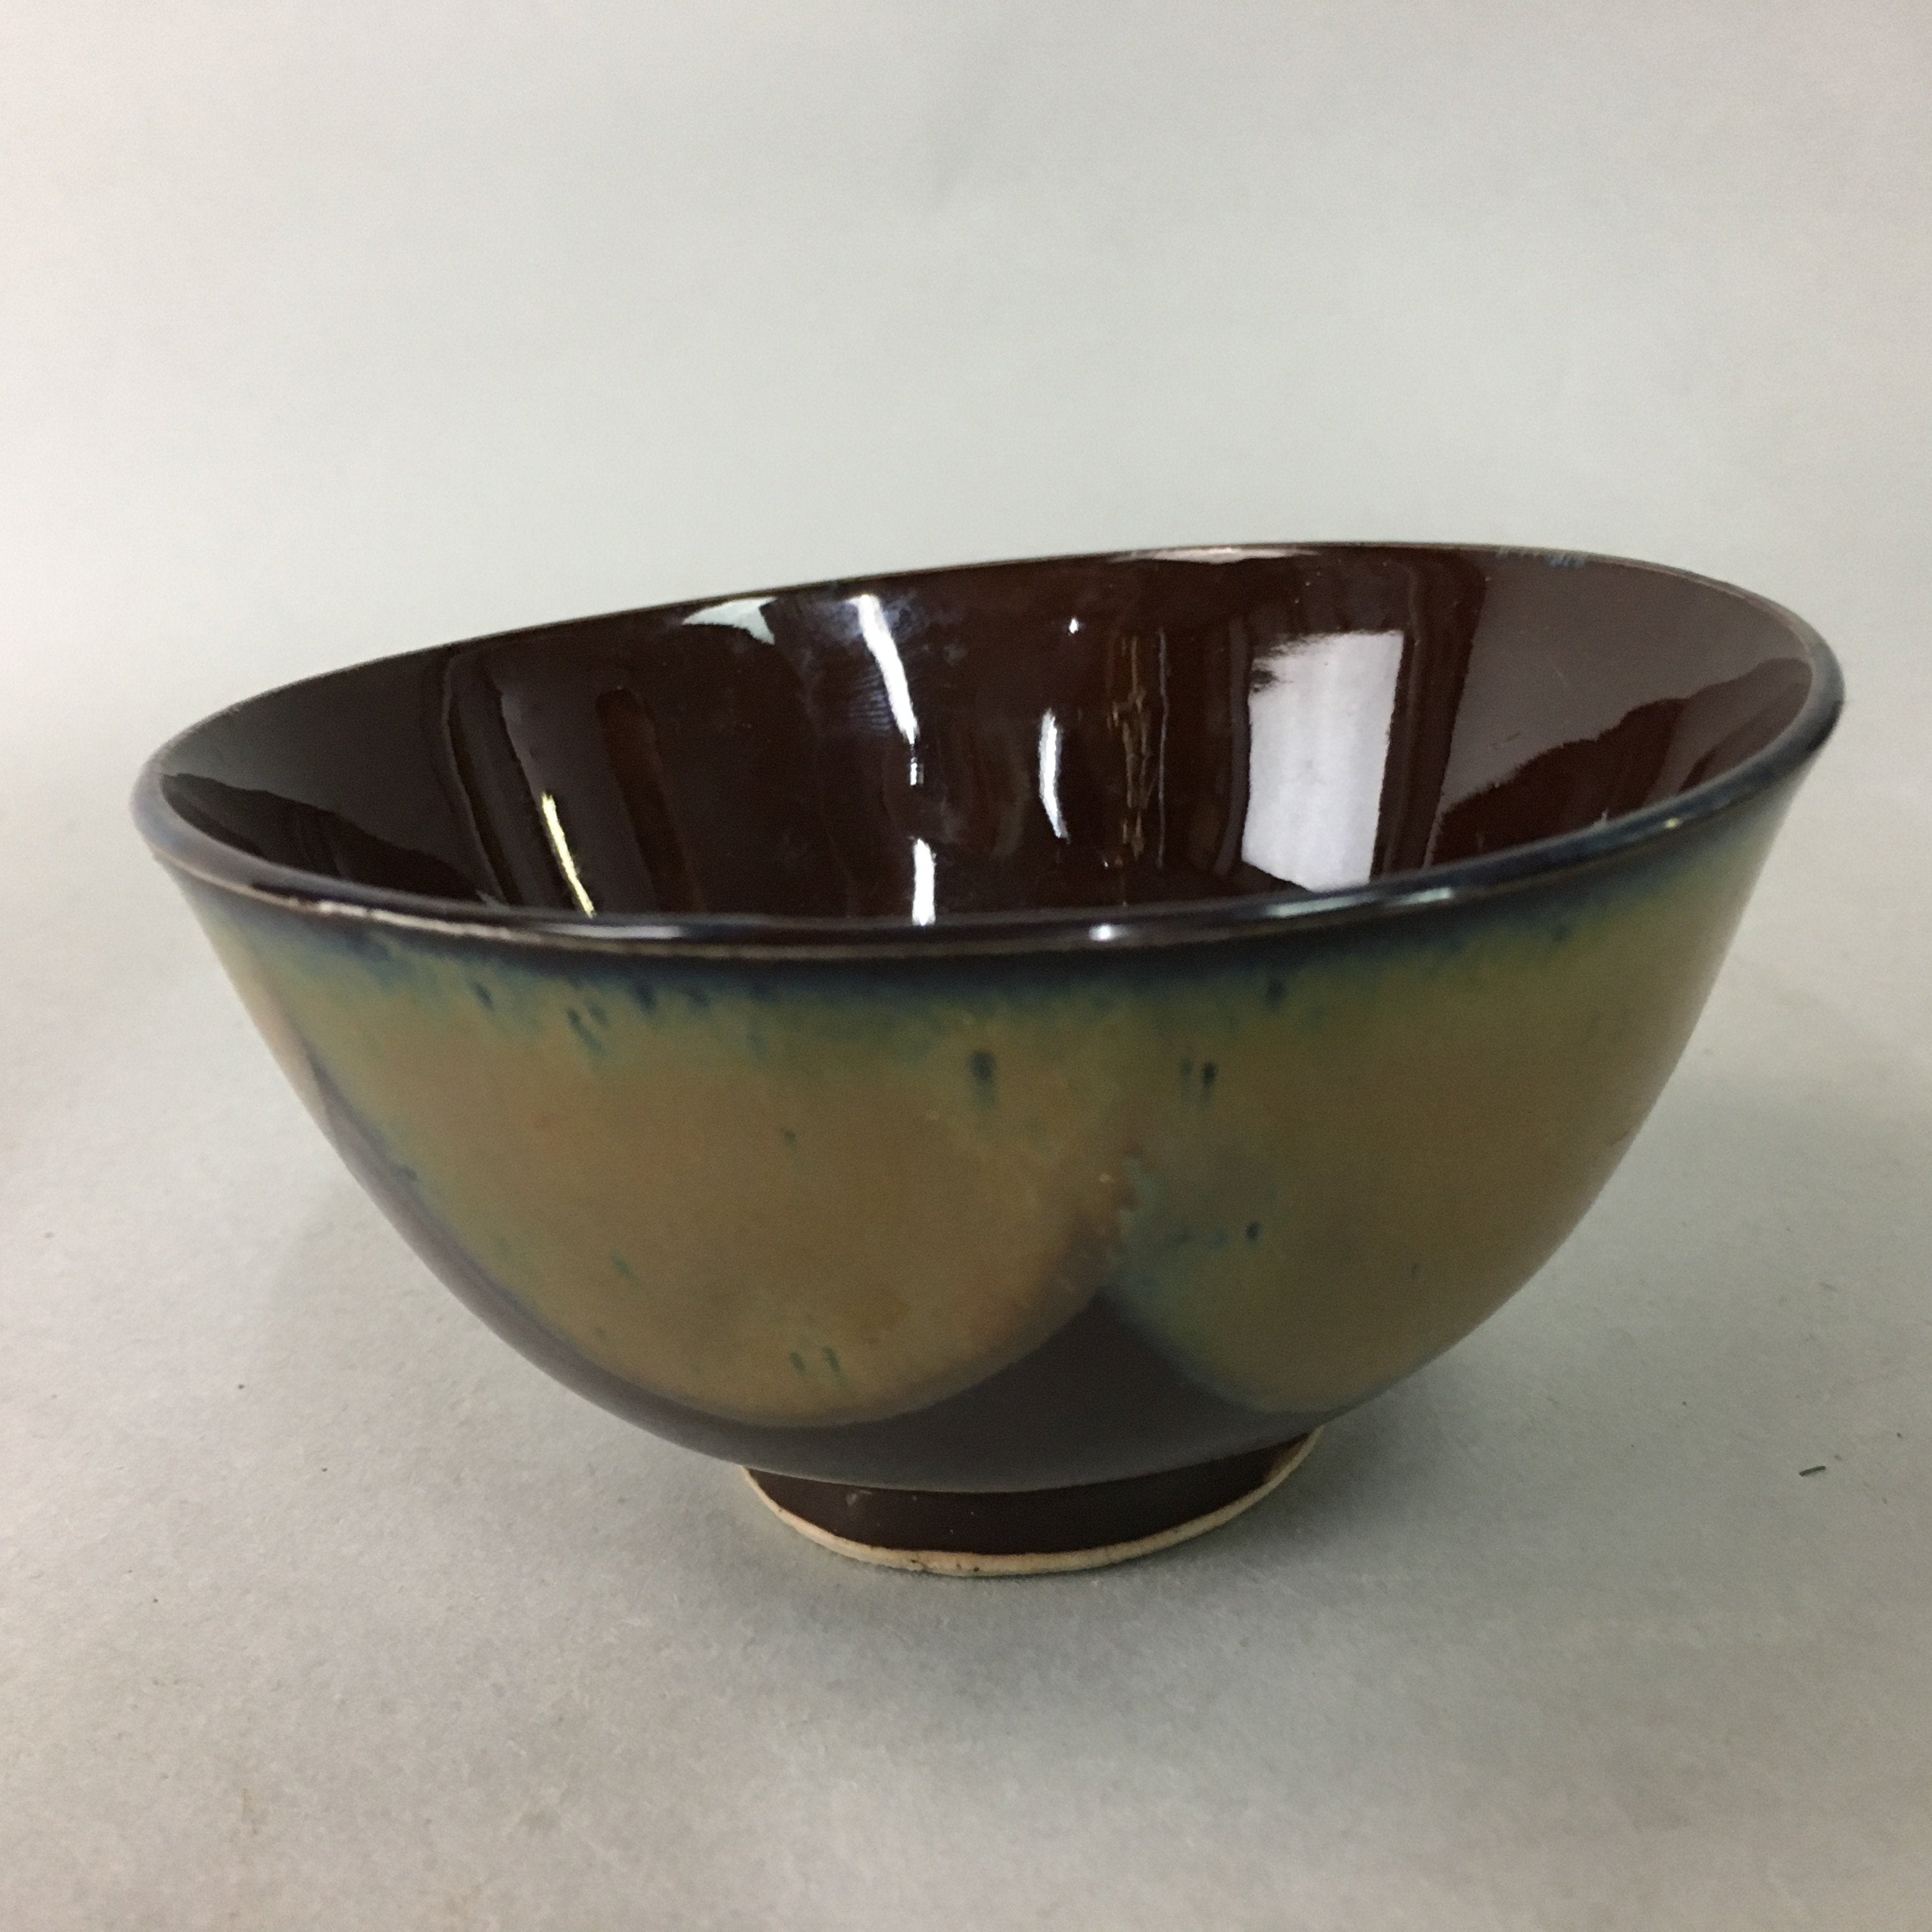 Japanese Porcelain Rice Bowl Vtg Brown Chawan Shiny Smooth Flowing PT775